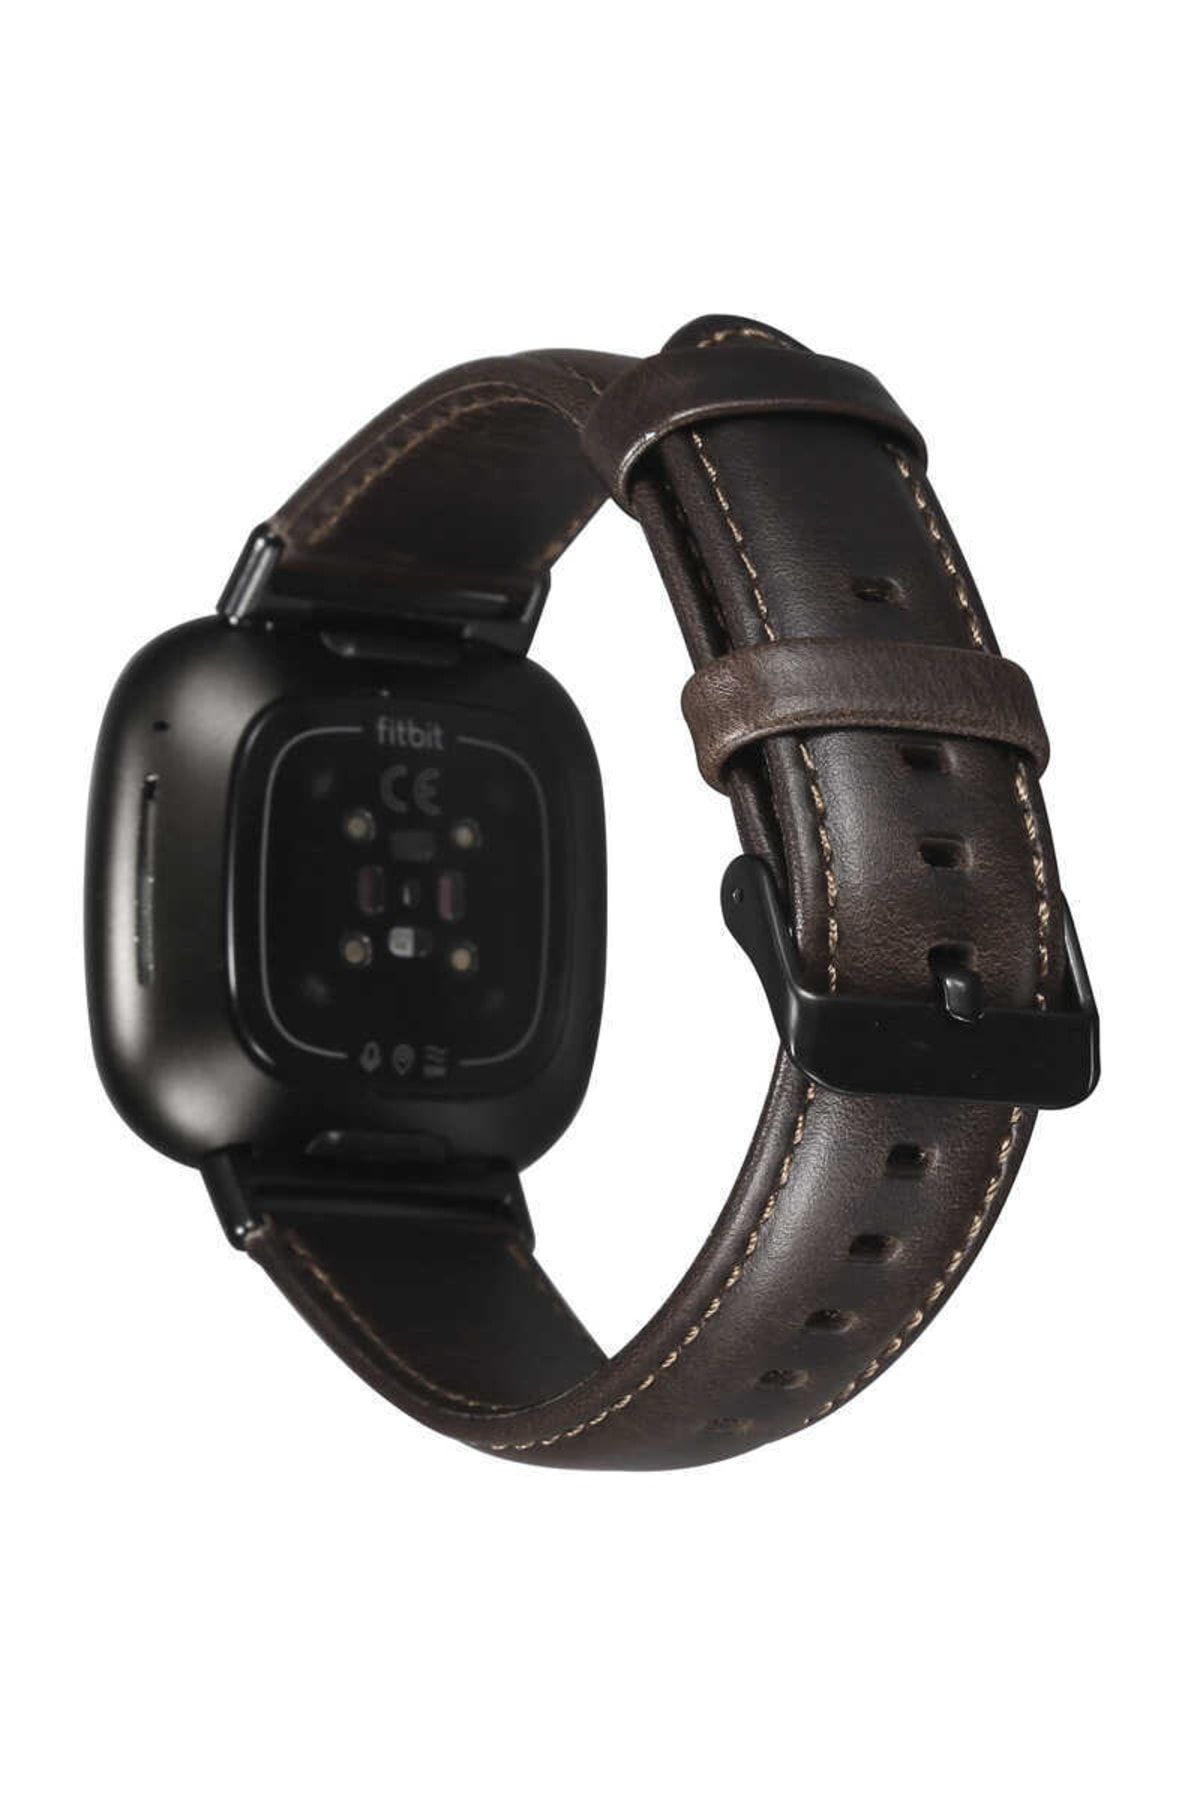 WIWU Watch 38mm Leather Watchband Deri Saat Kordon Kayış Bileklik